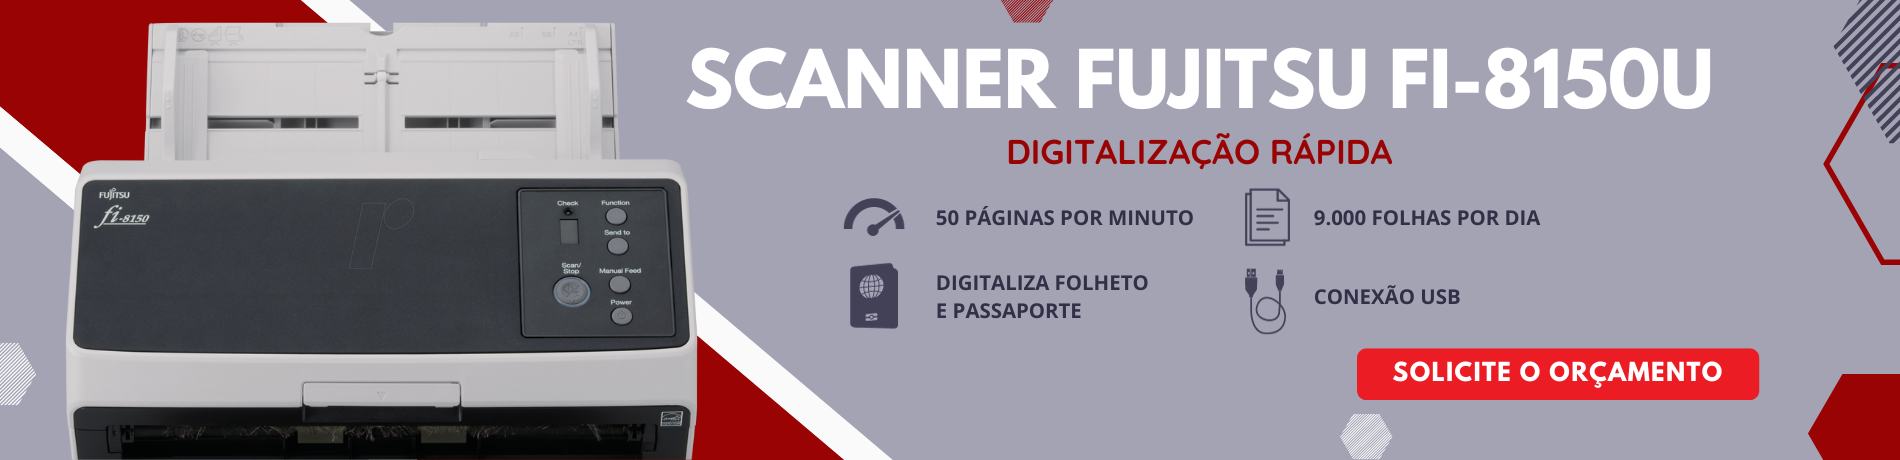 Banner- Scanner Fujitsu Fi-8150U